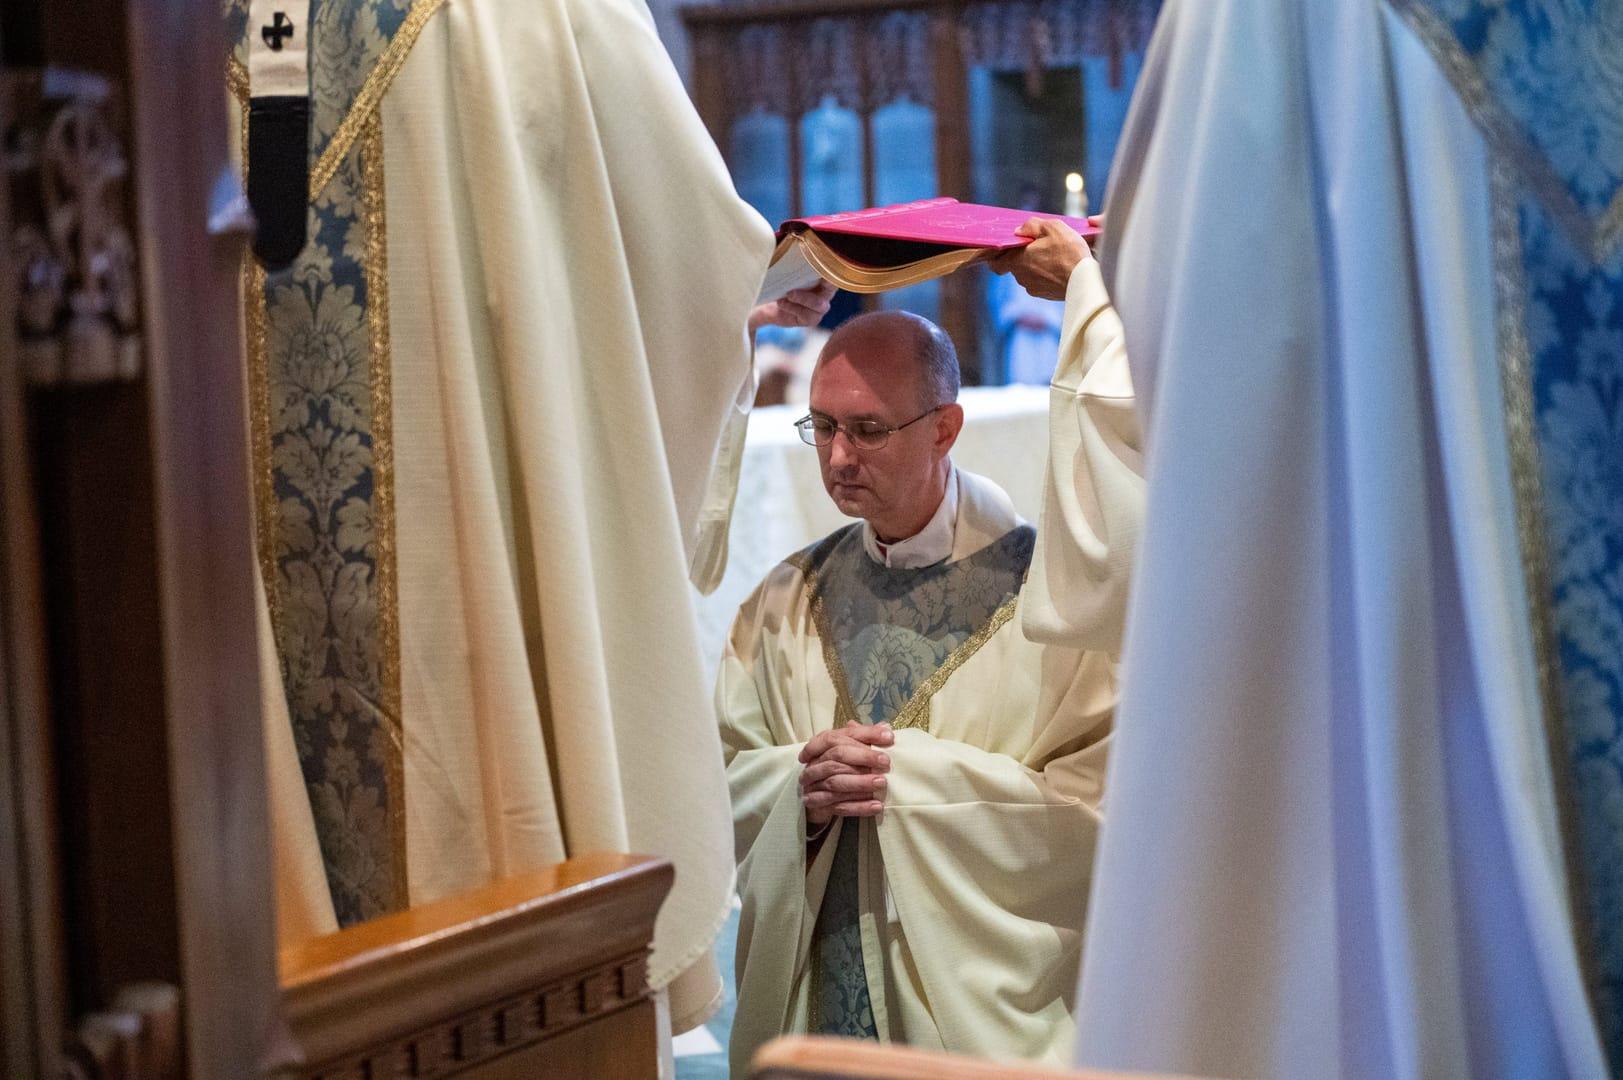 Redemptorist spirituality woven into bishop’s ordination Mass in Baltimore